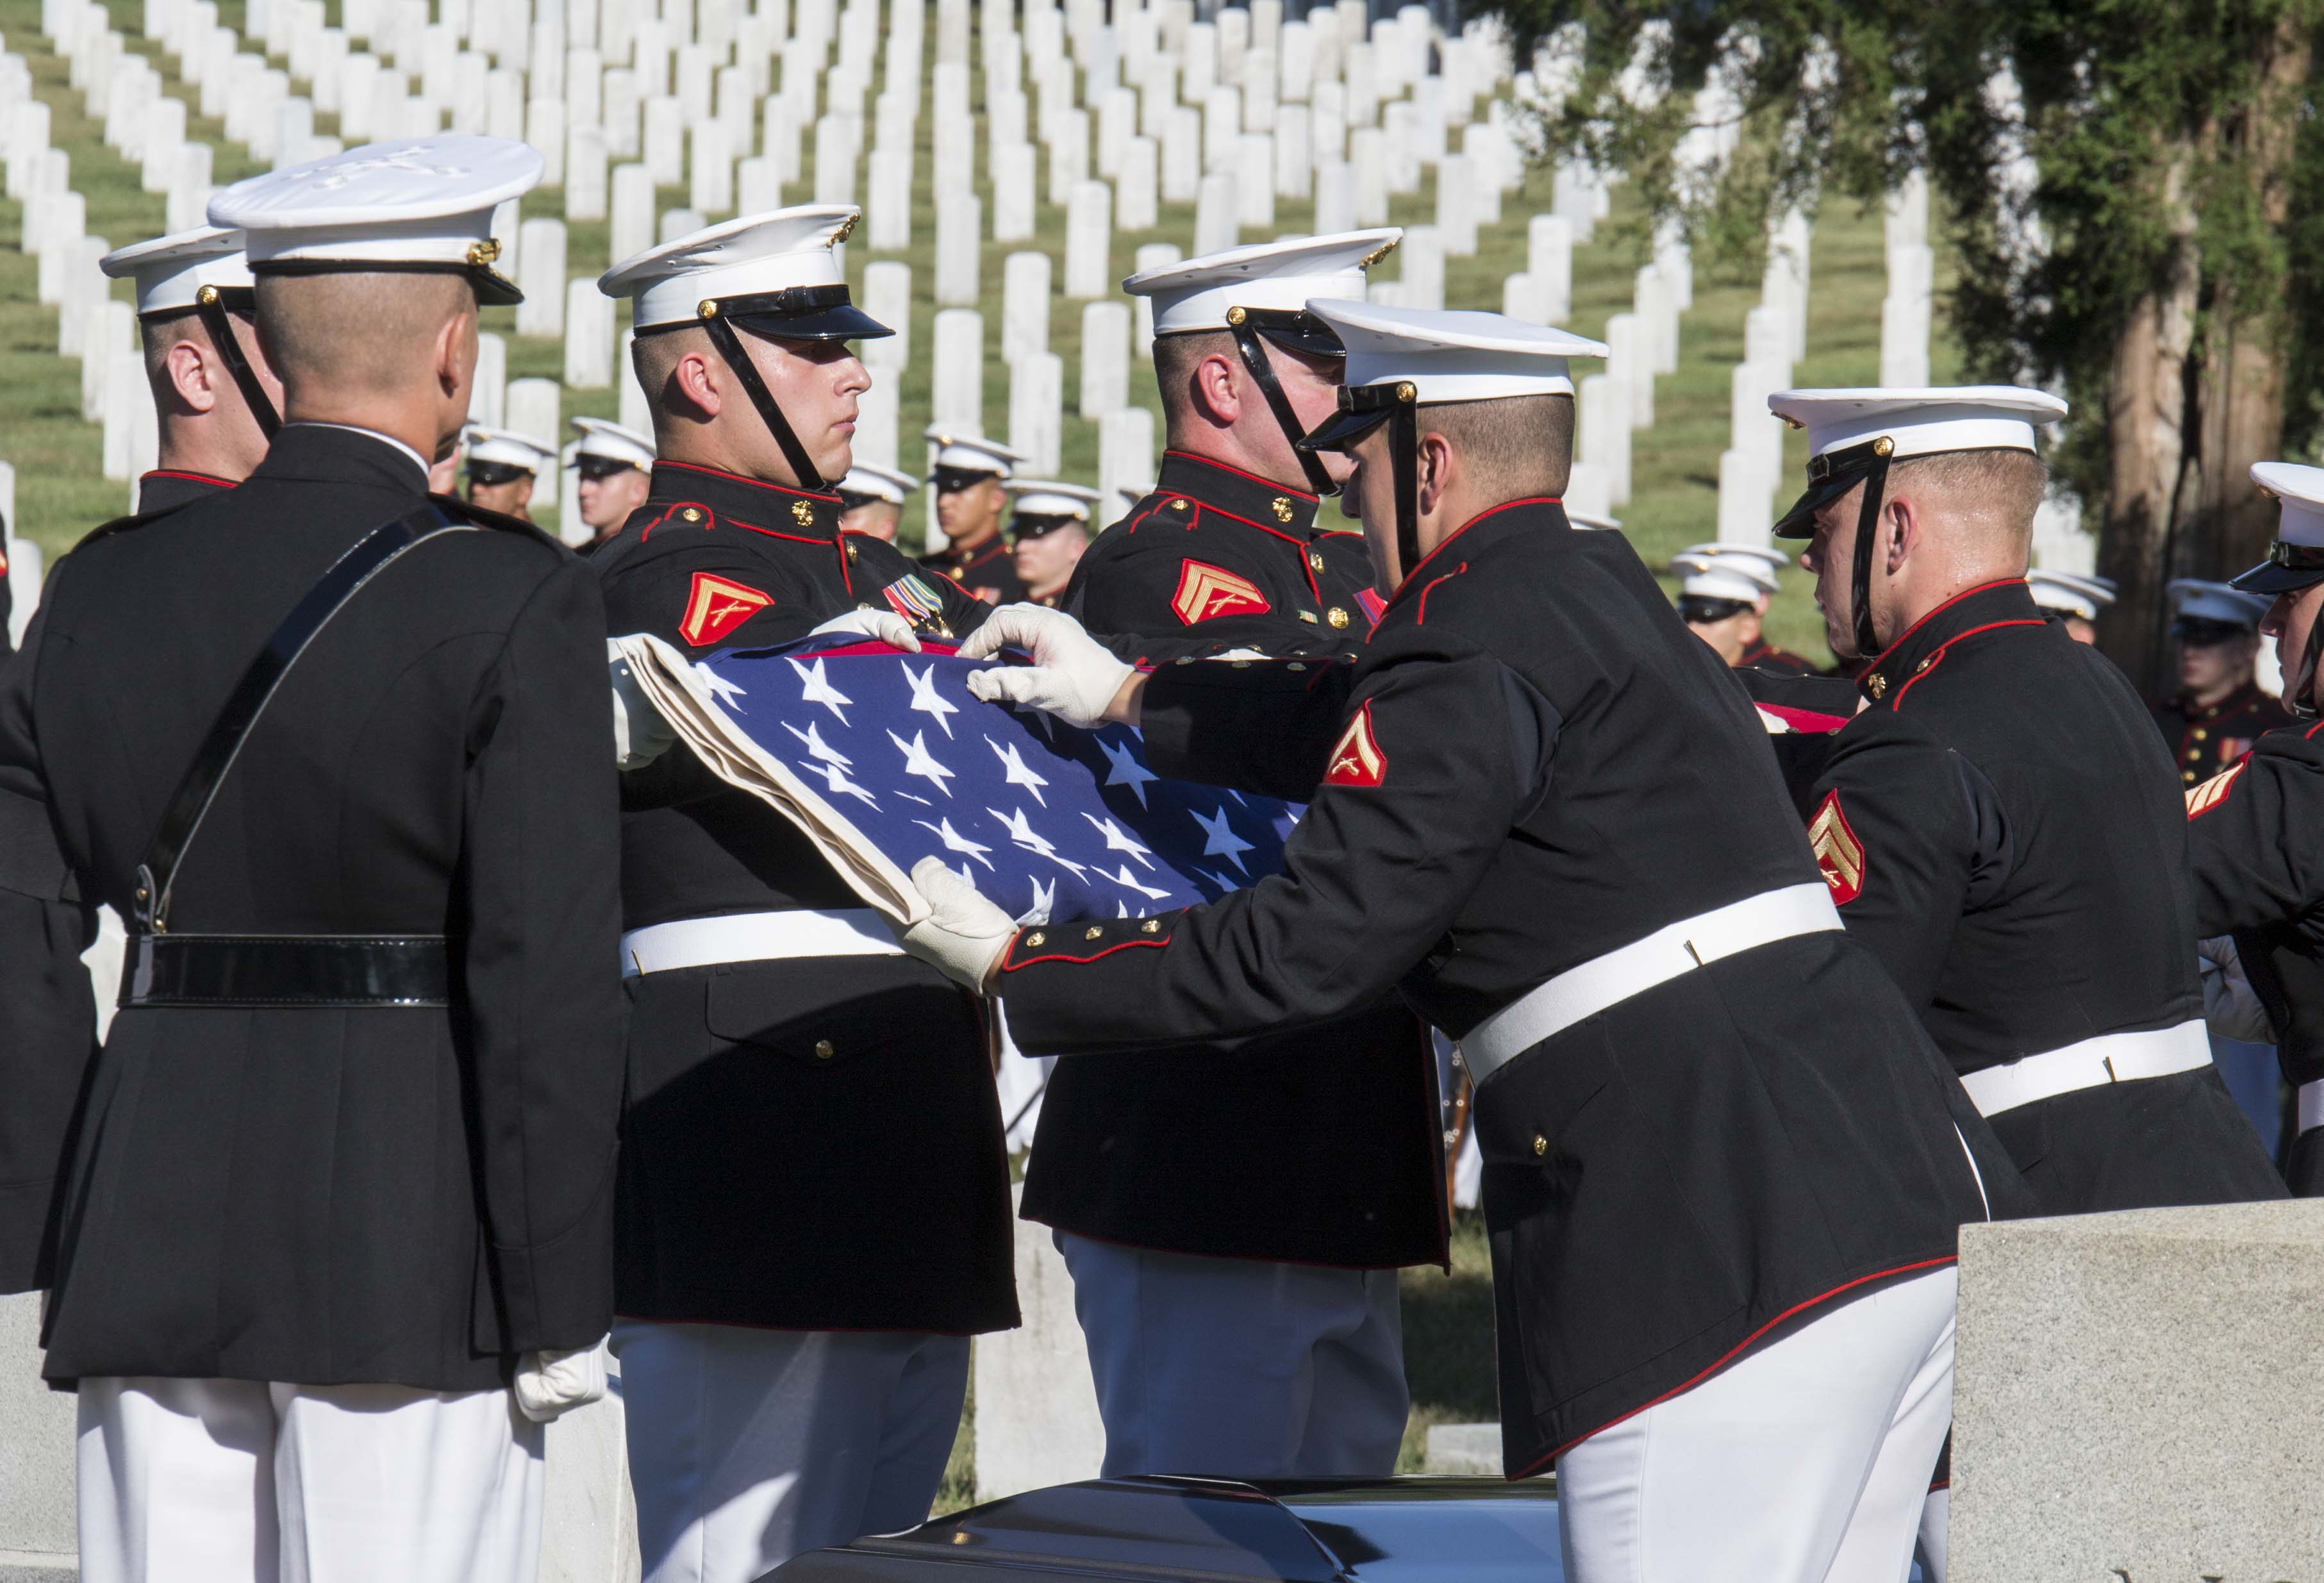 Full Honors Funeral Held At Arlington National Cemetery